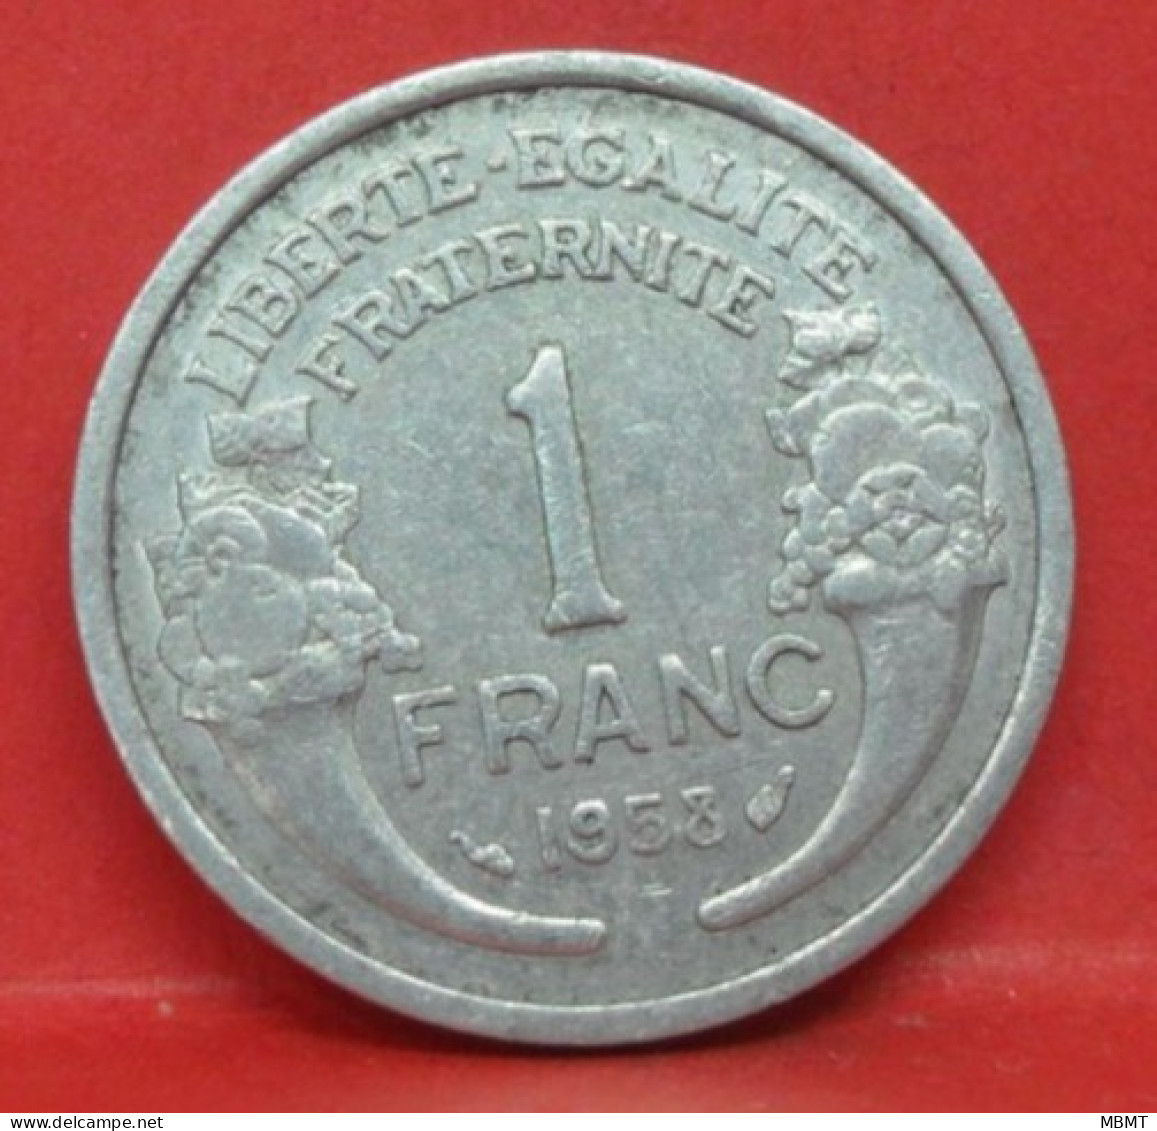 1 Franc Morlon Alu 1958 - TTB - Pièce Monnaie France - Article N°686 - 1 Franc